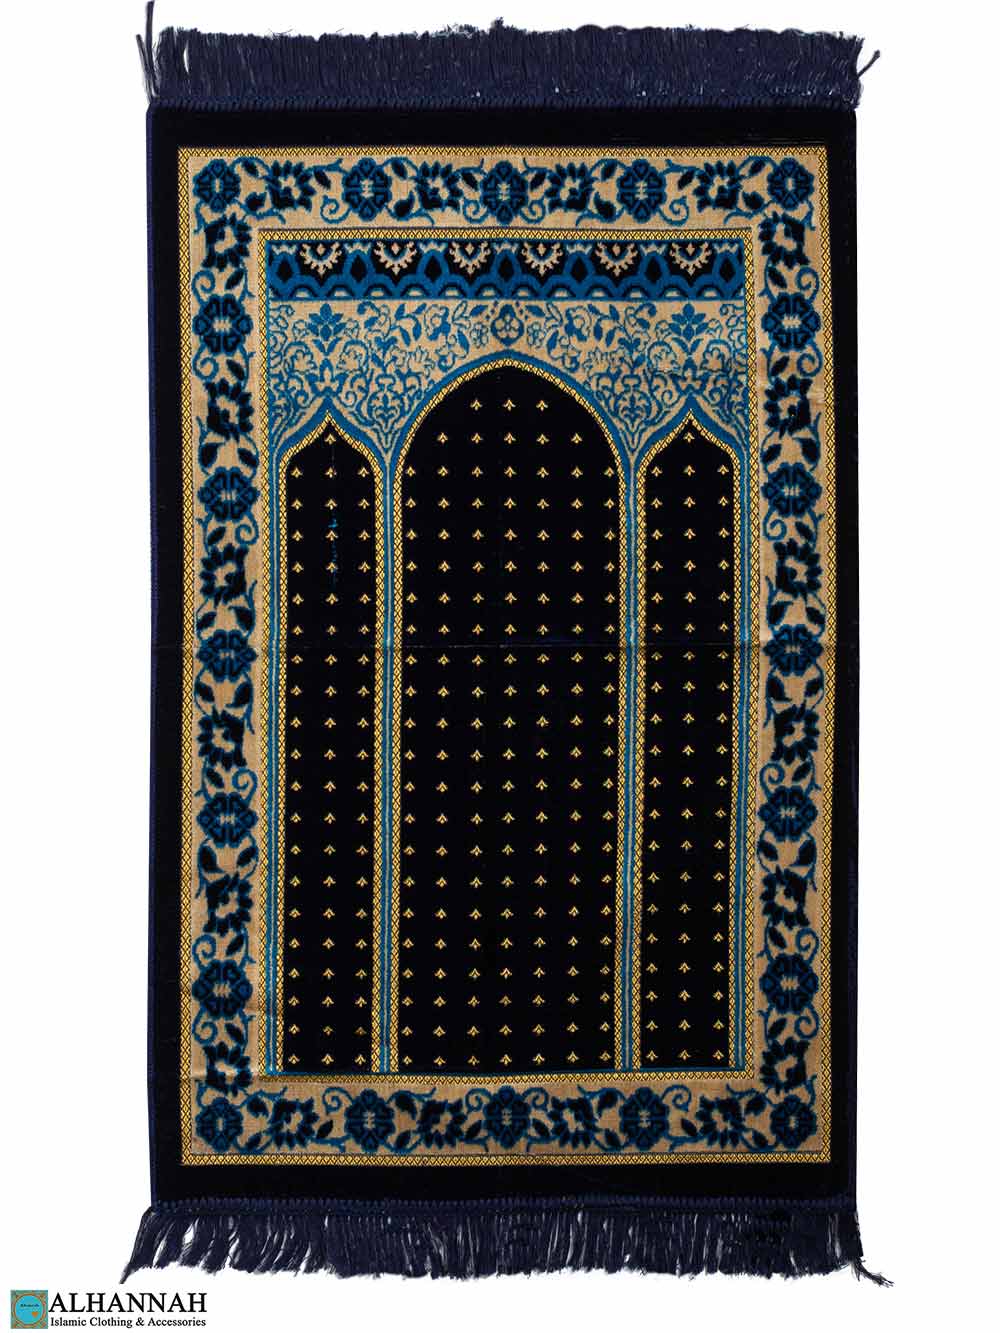 Triple Arch Turkish Prayer Rug - Navy | II1387 » Alhannah Islamic Clothing